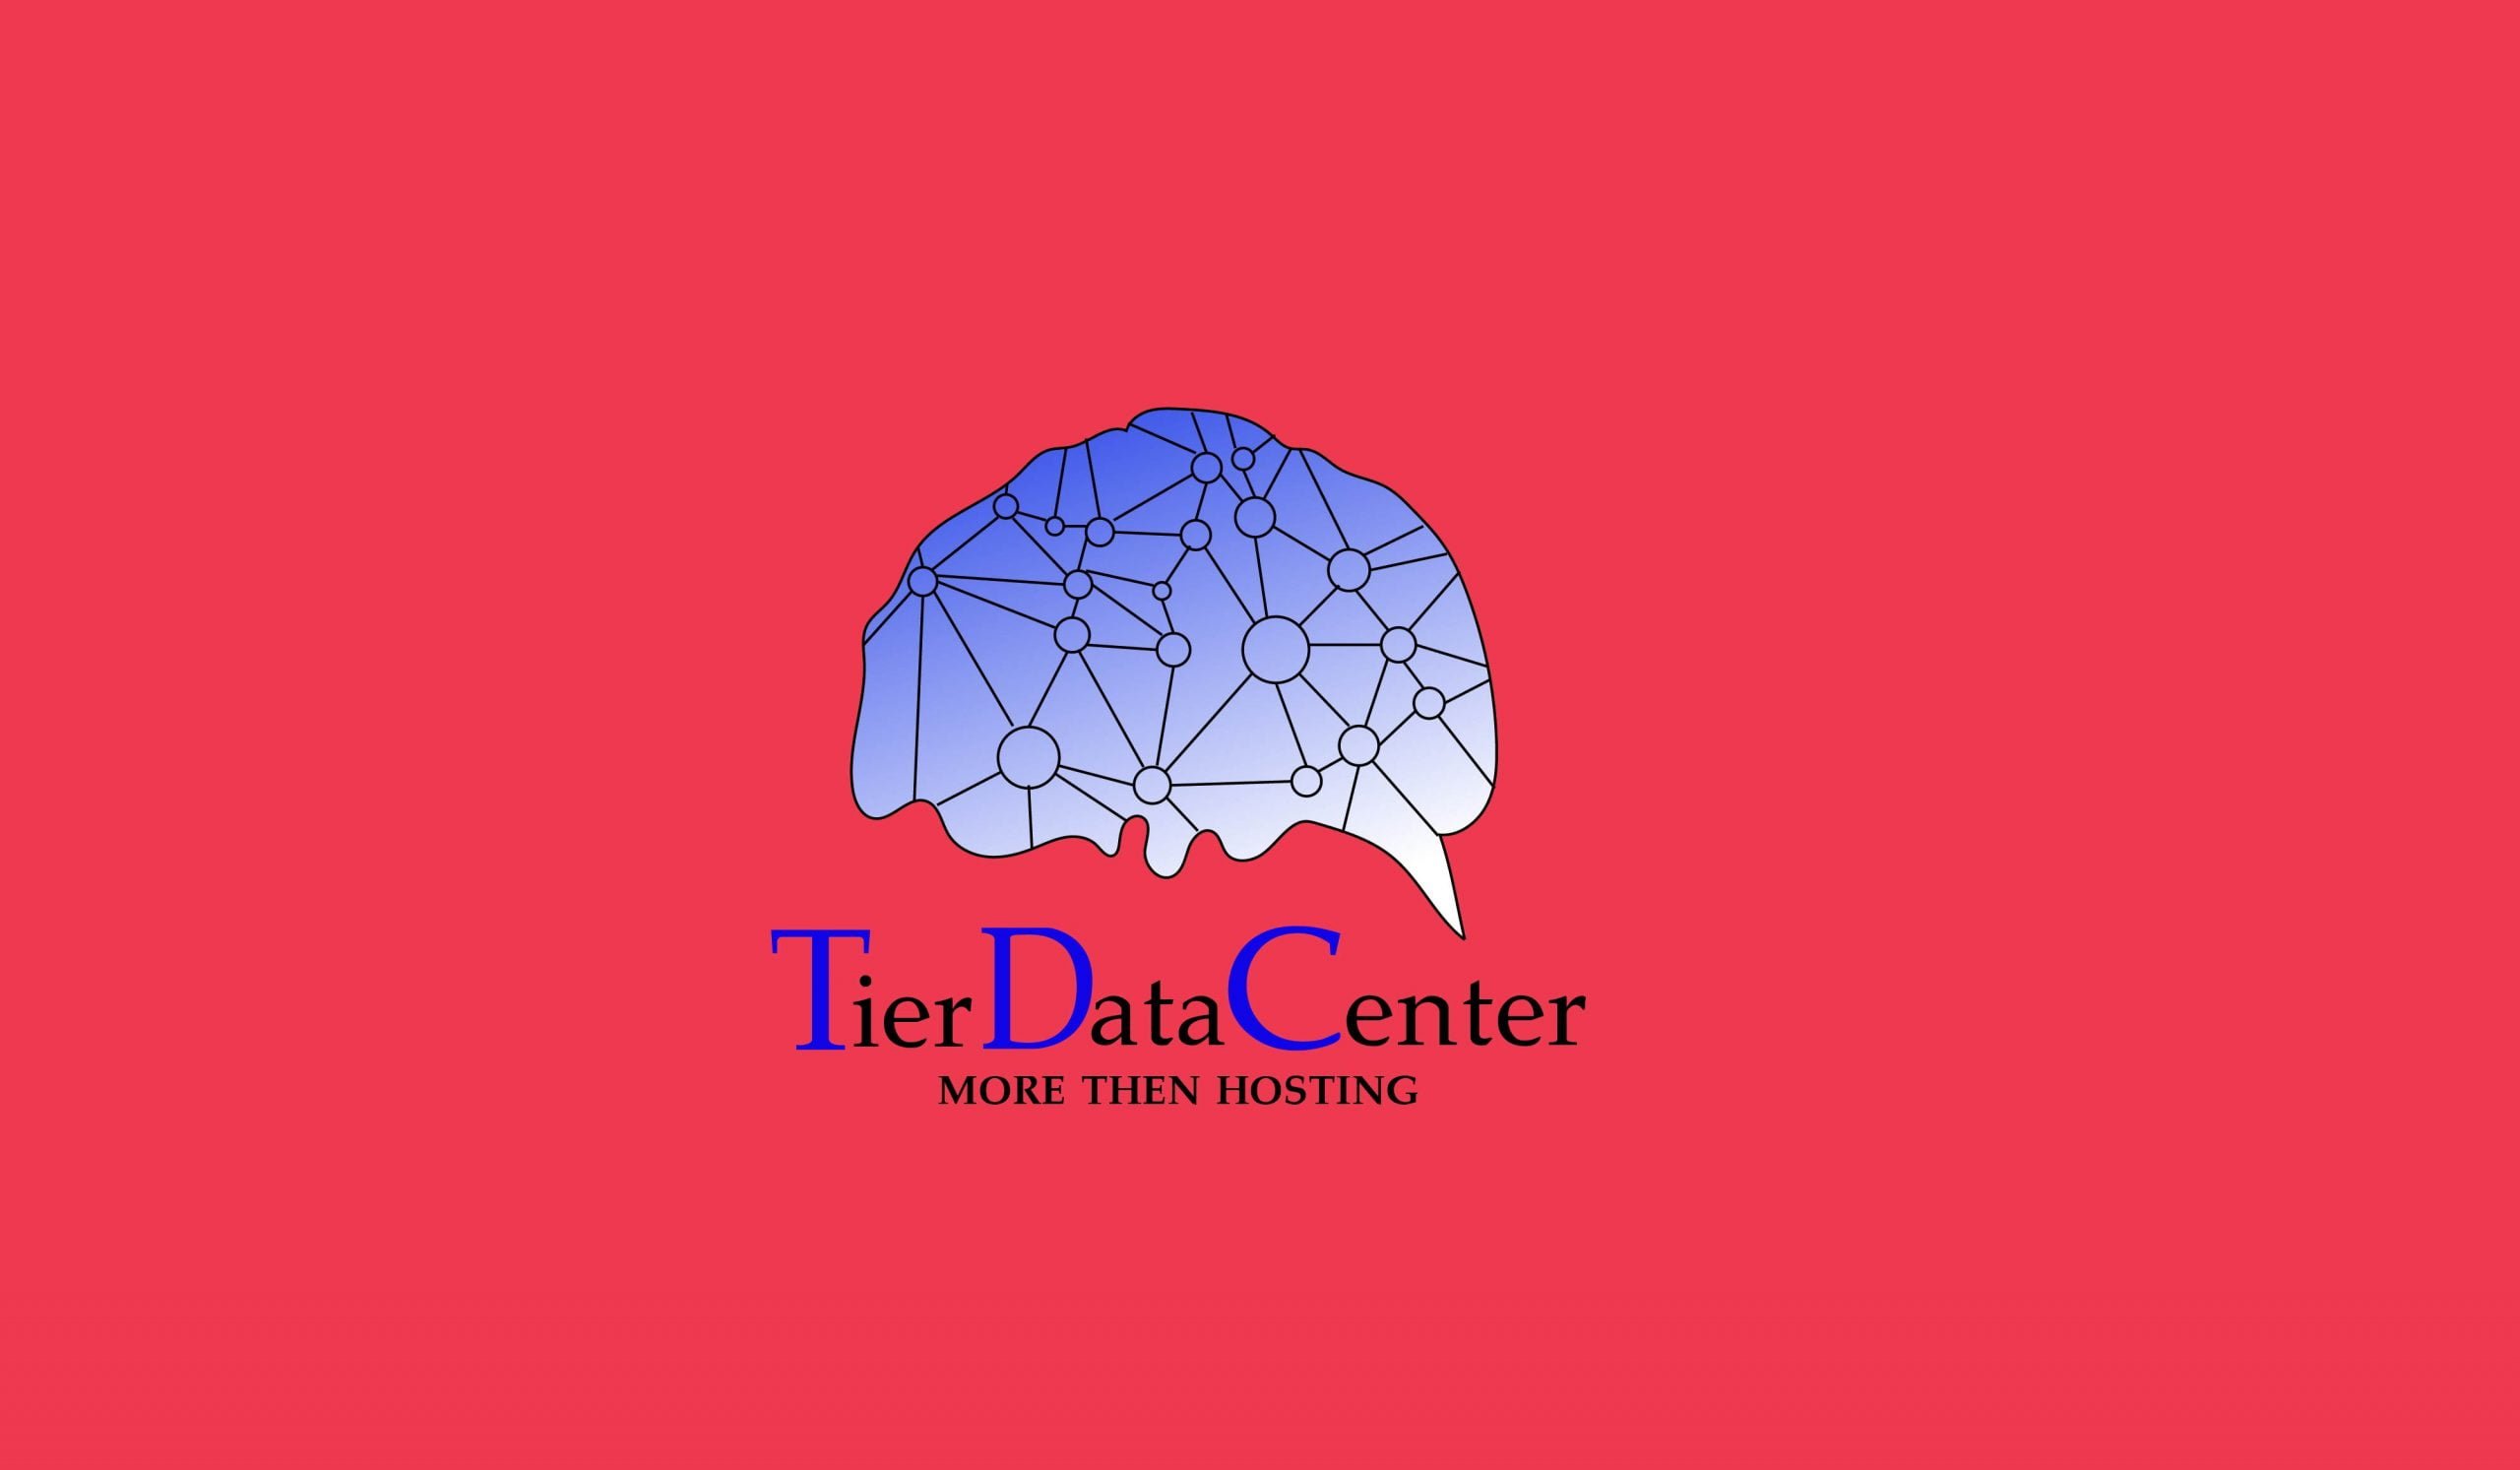 Tier data center